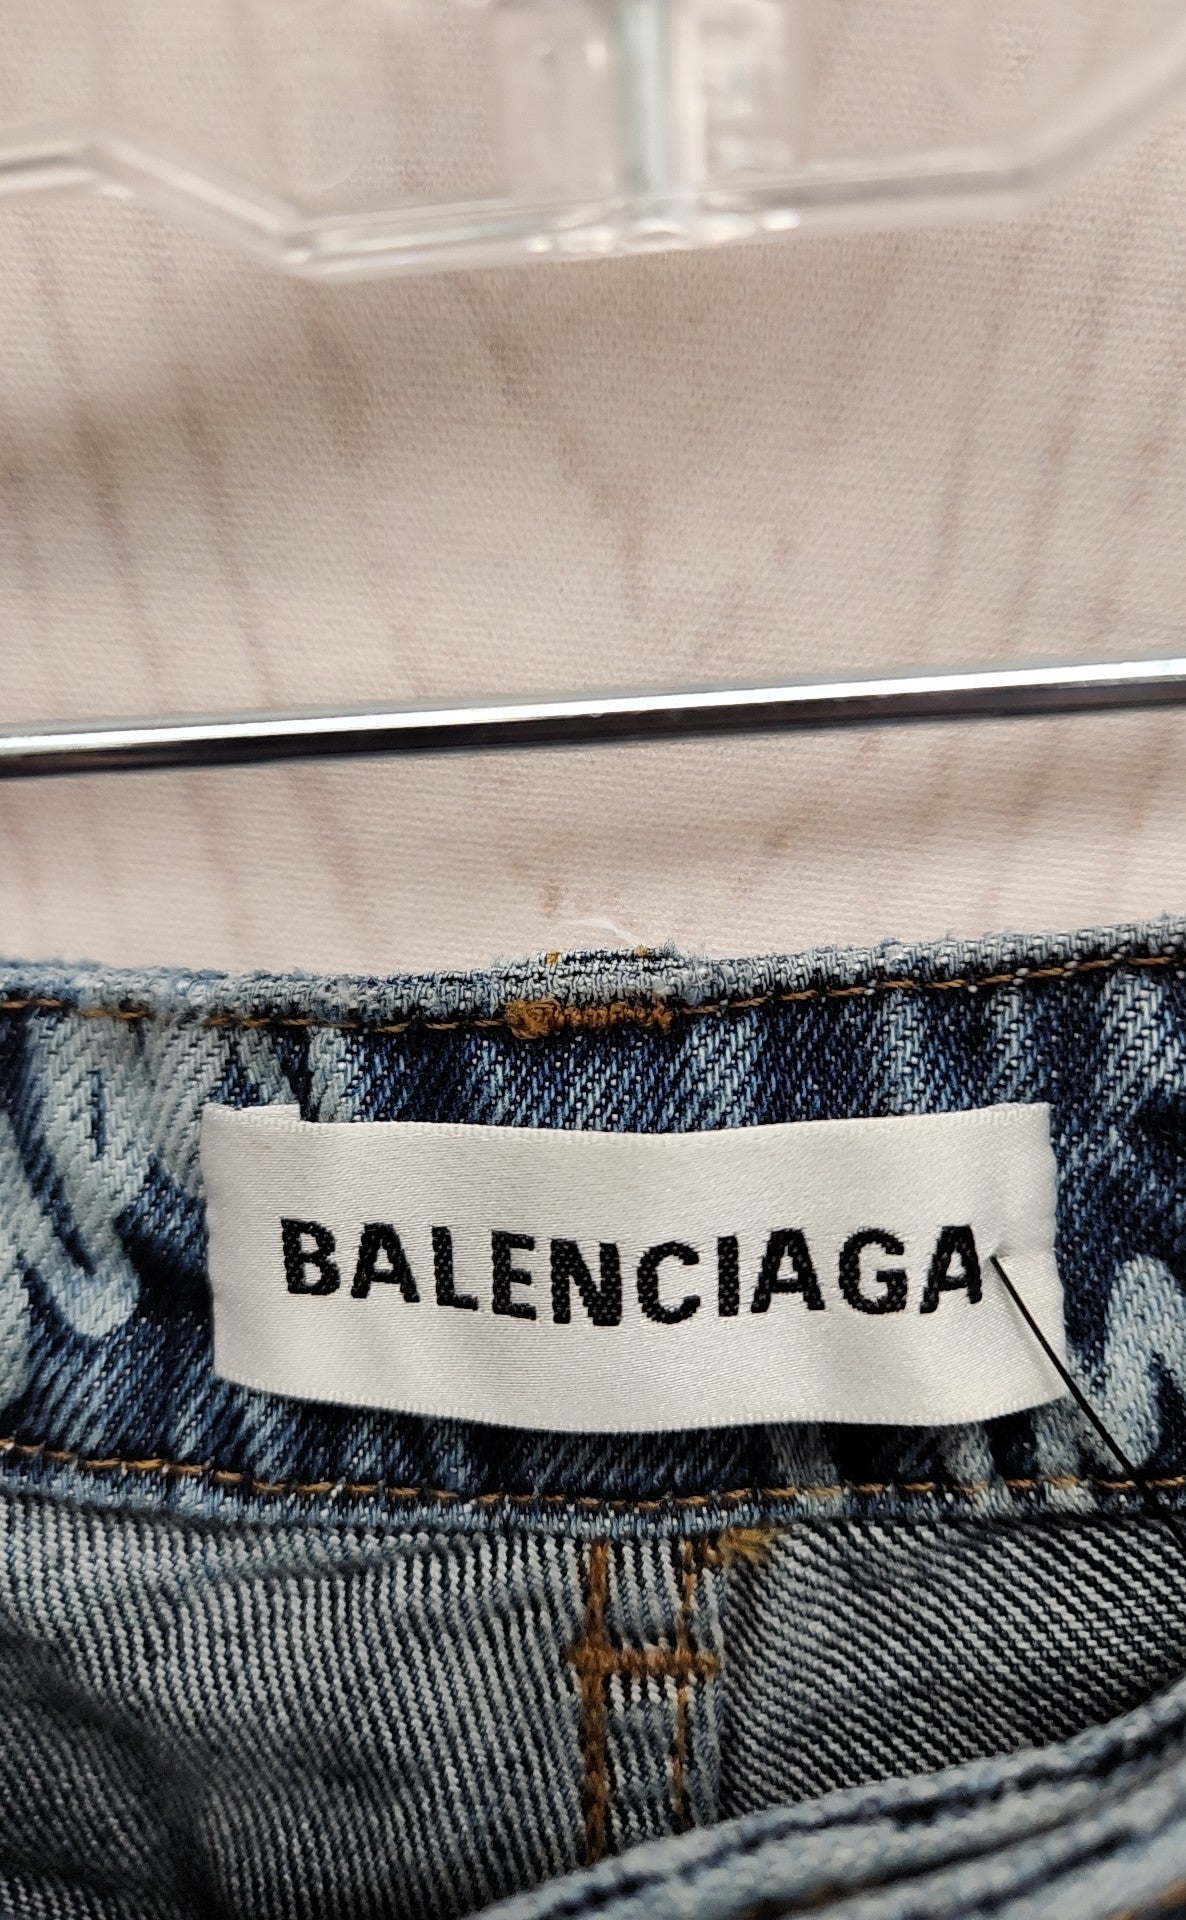 Balenciaga All Over Cut Off Women's Size 29 (7-8) Denim Long Shorts Logo